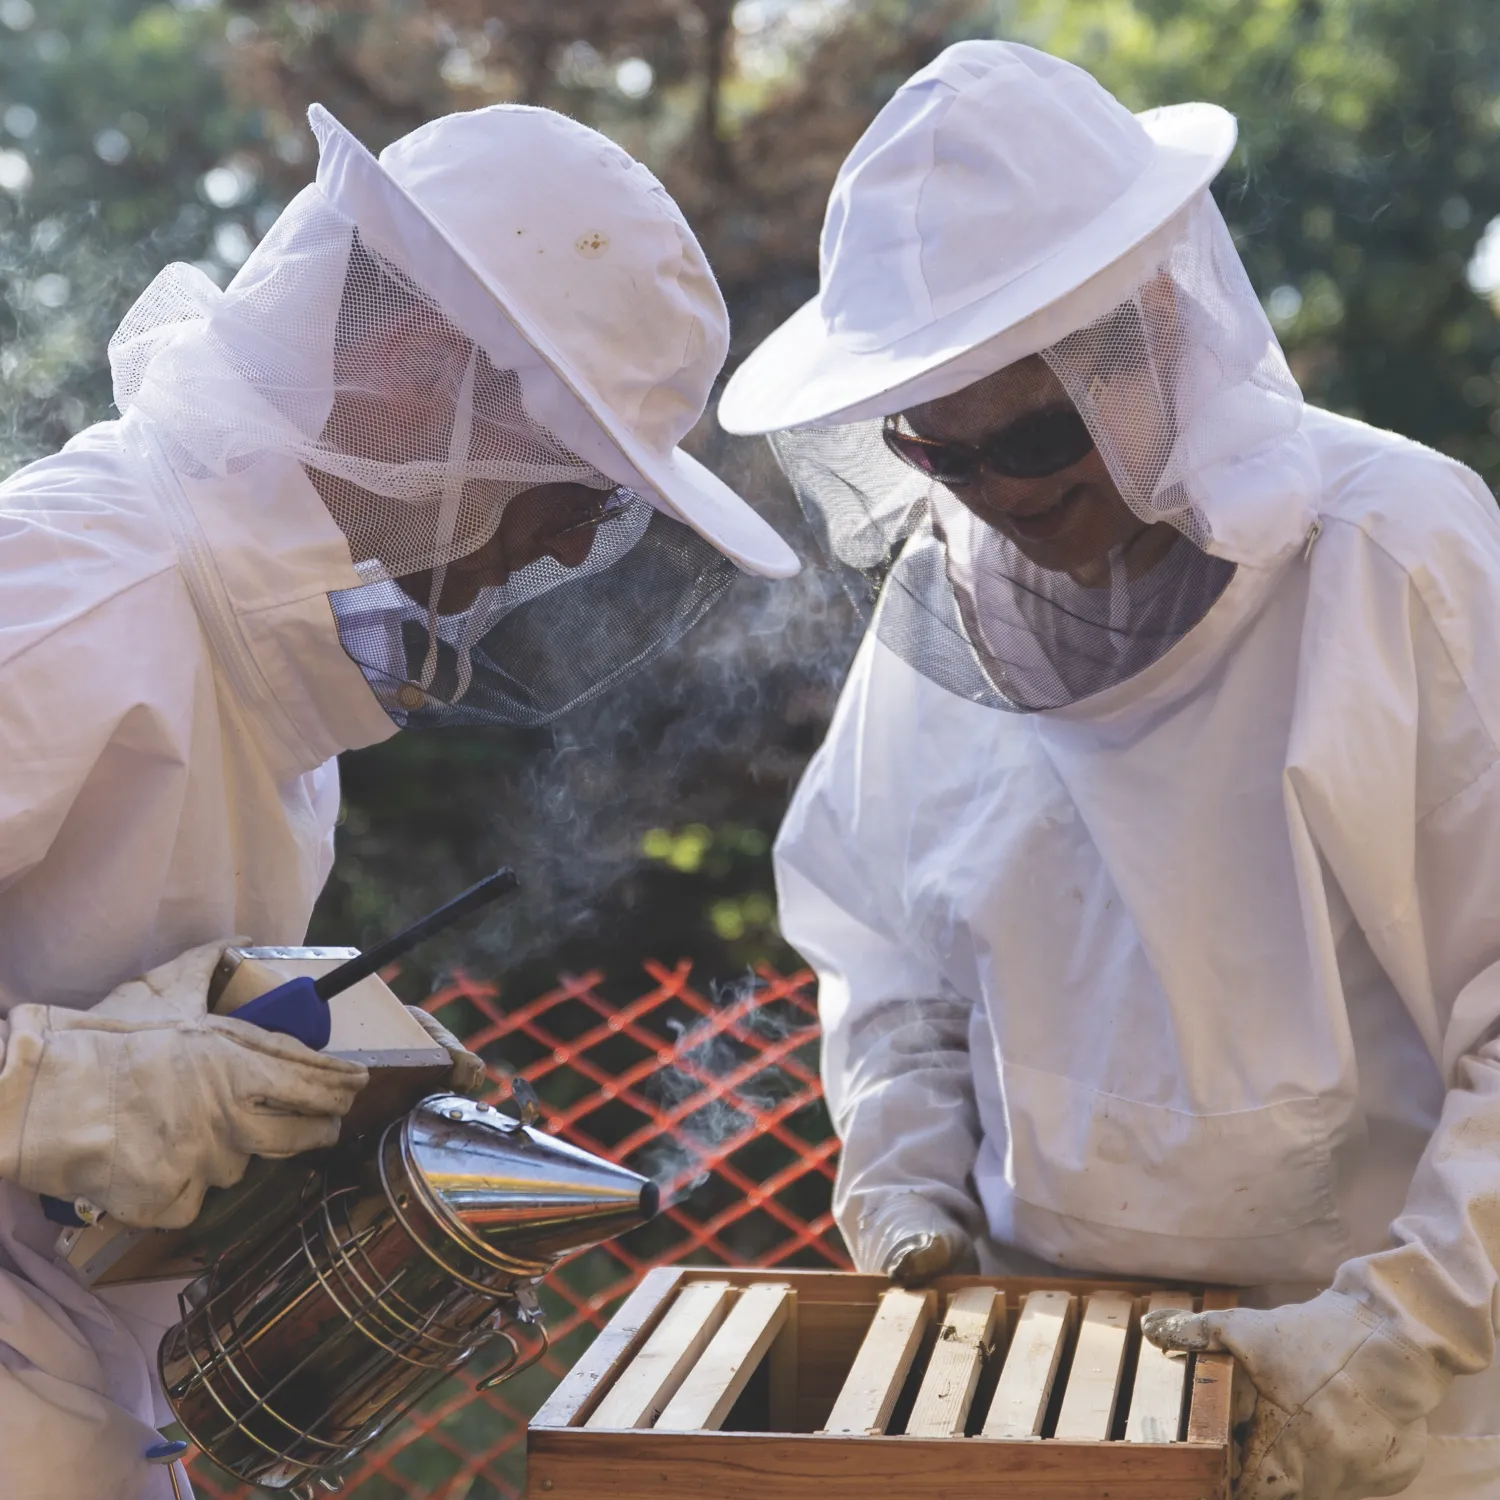 Bee Keepers Spraying Heat on Hive